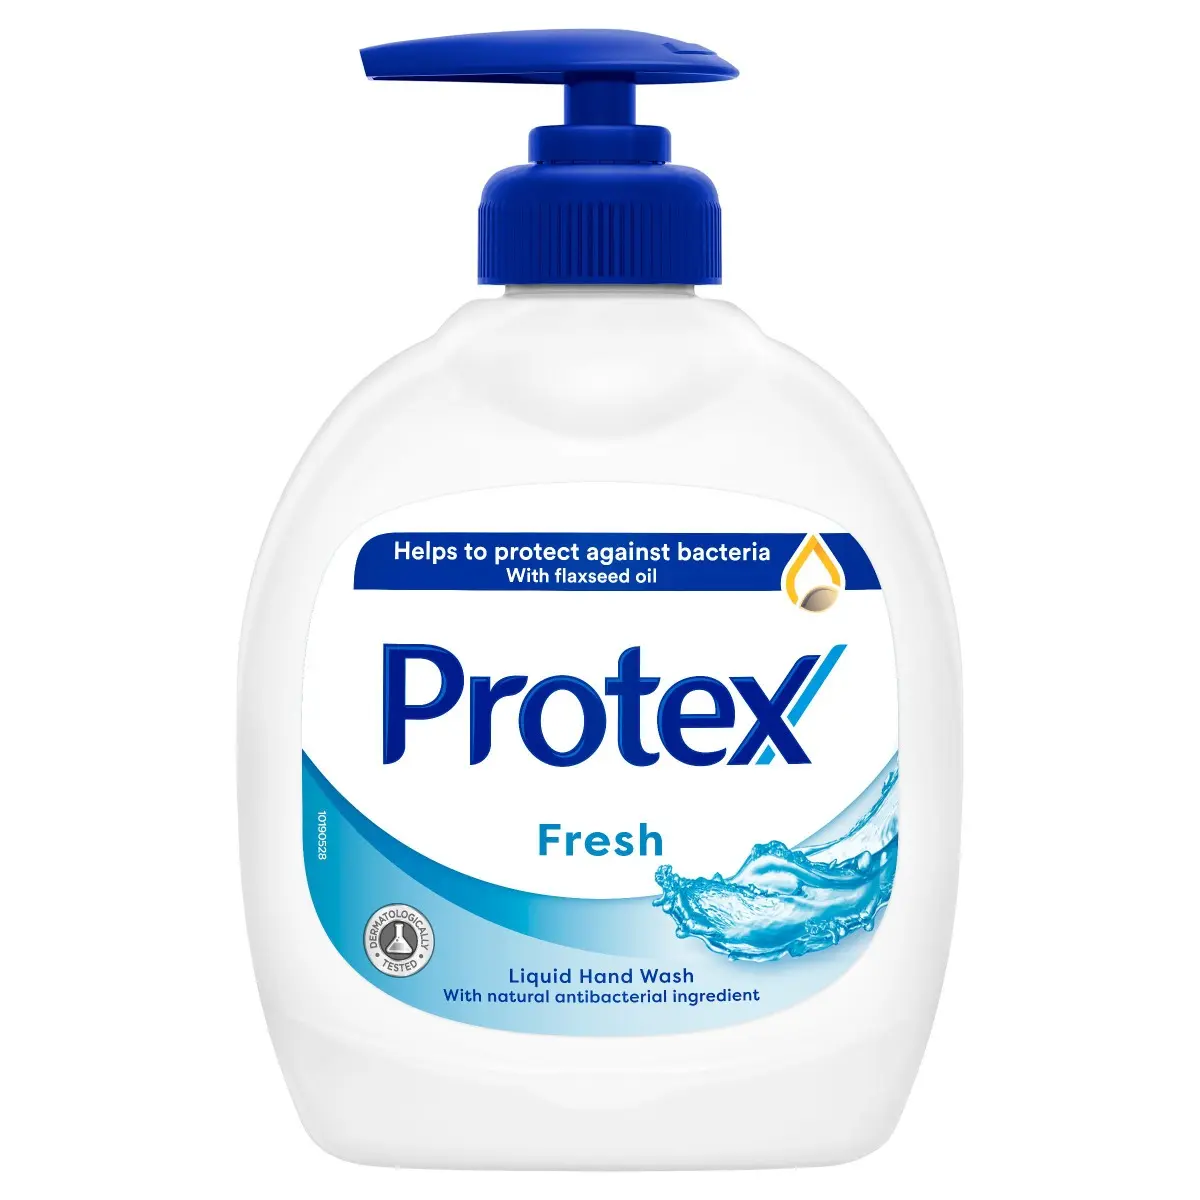 Sapun lichid Protex Fresh 300ml, cu ingredient natural antibacterian